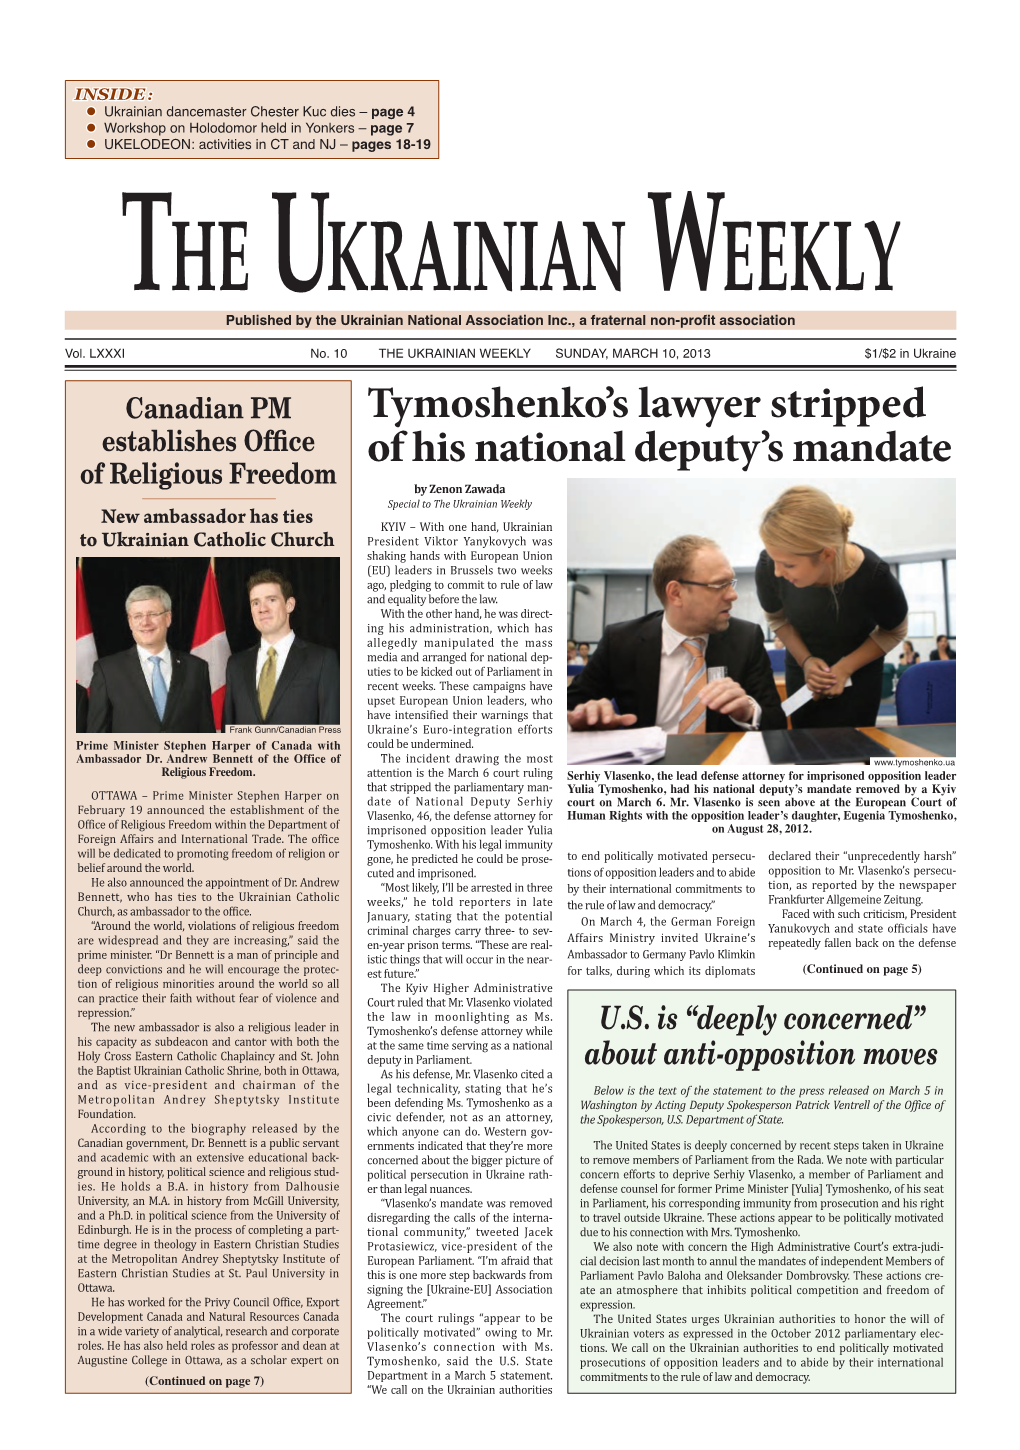 The Ukrainian Weekly 2013, No.10